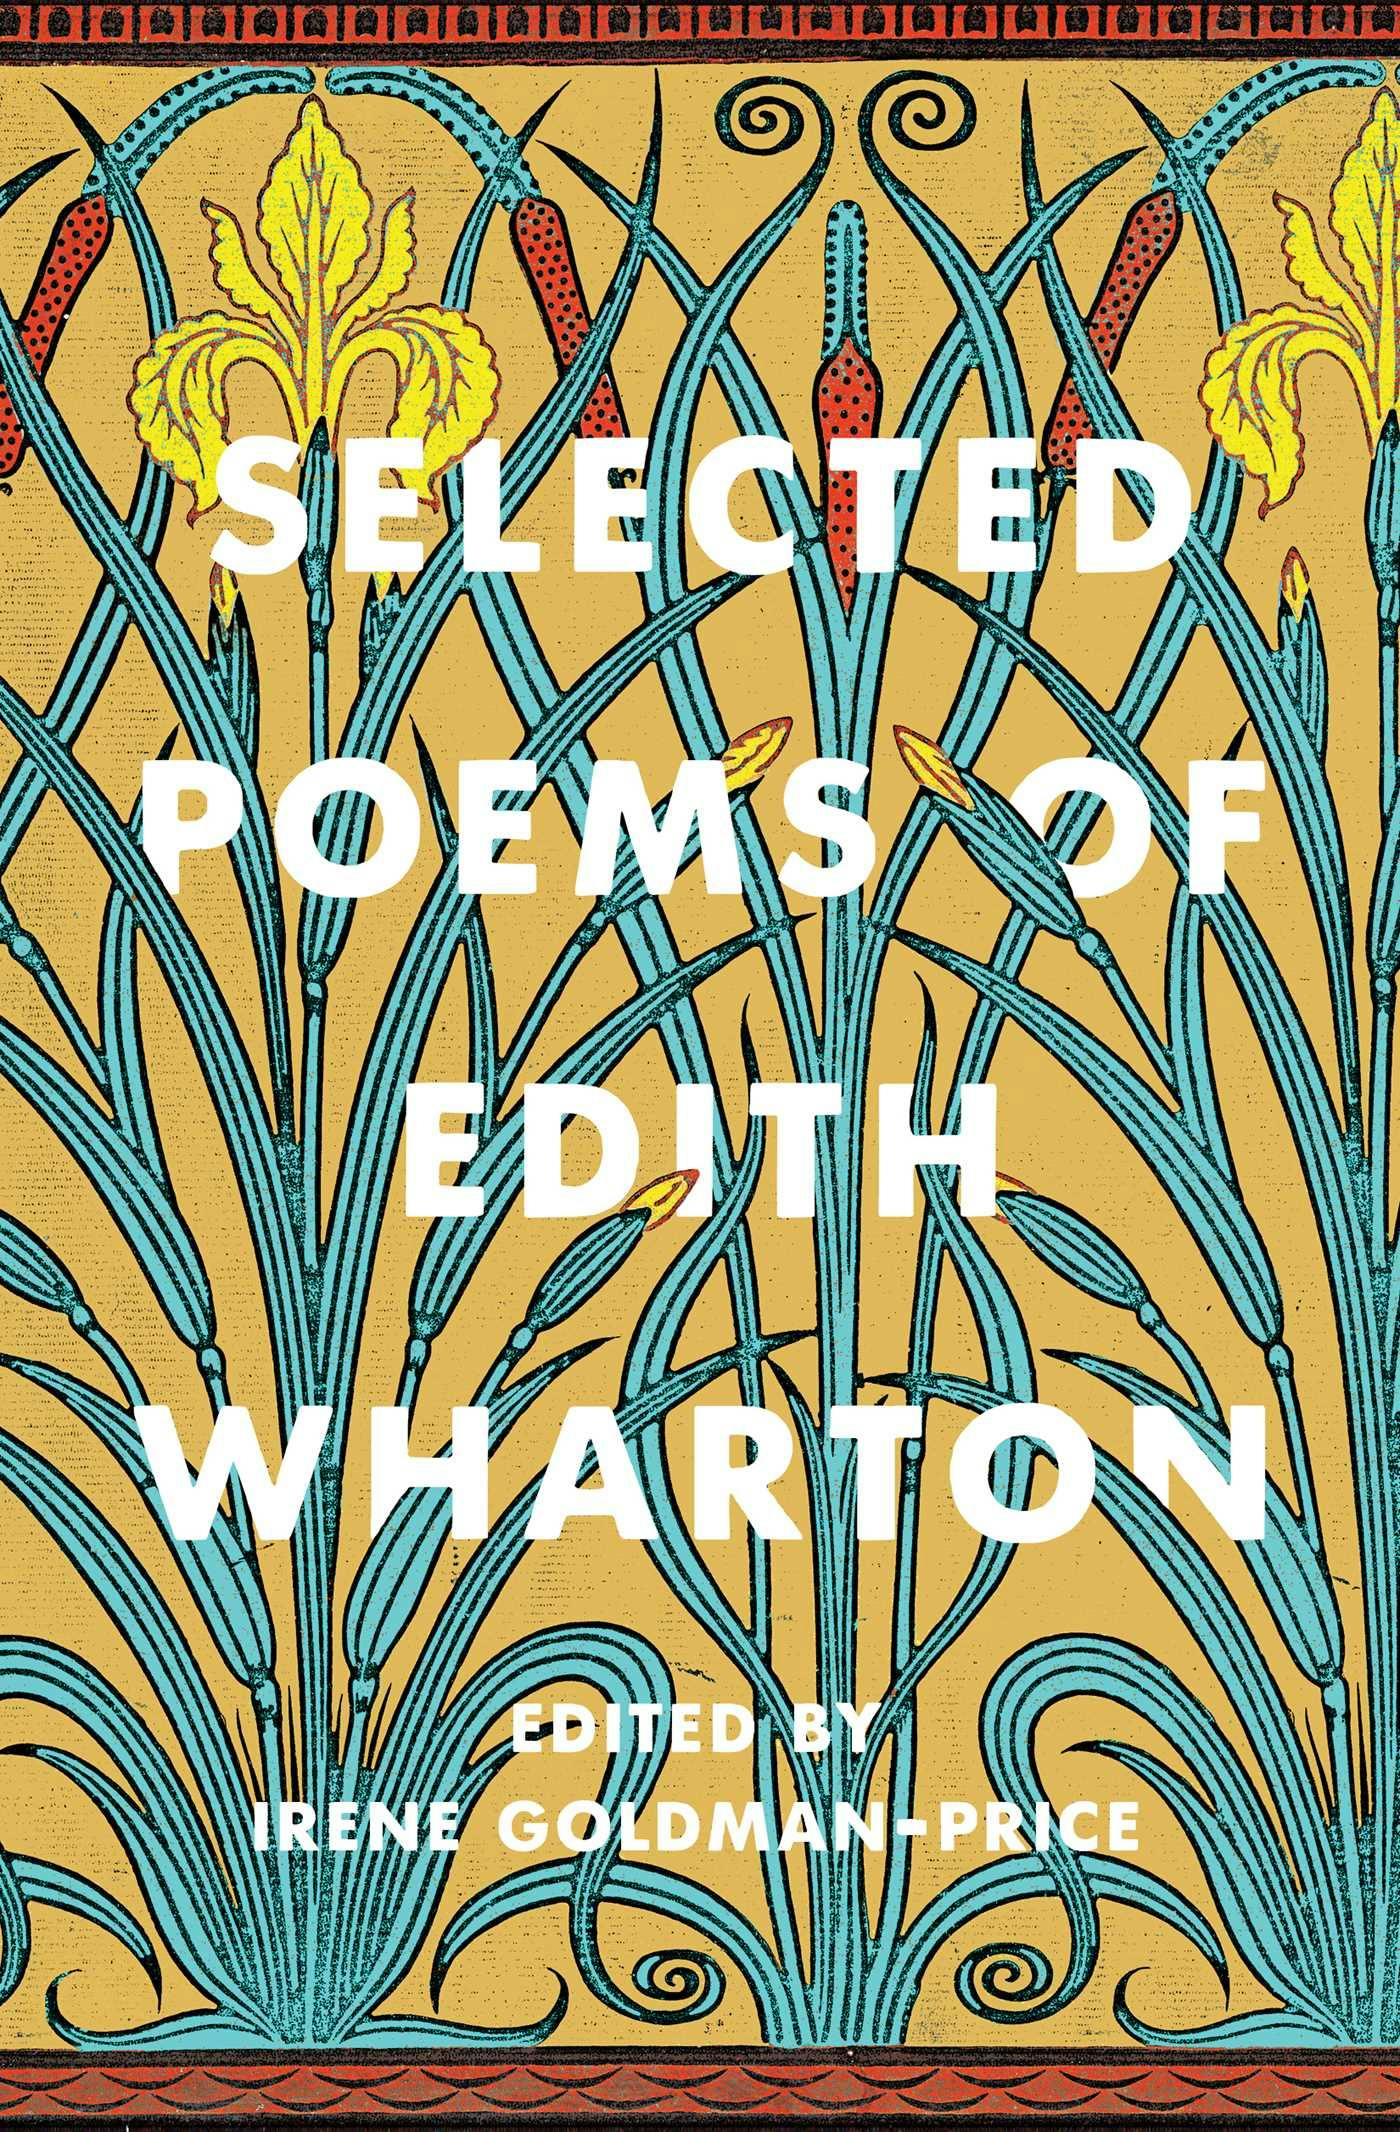 Selected Poems of Edith Wharton - Edith Wharton, Irene Goldman-Price